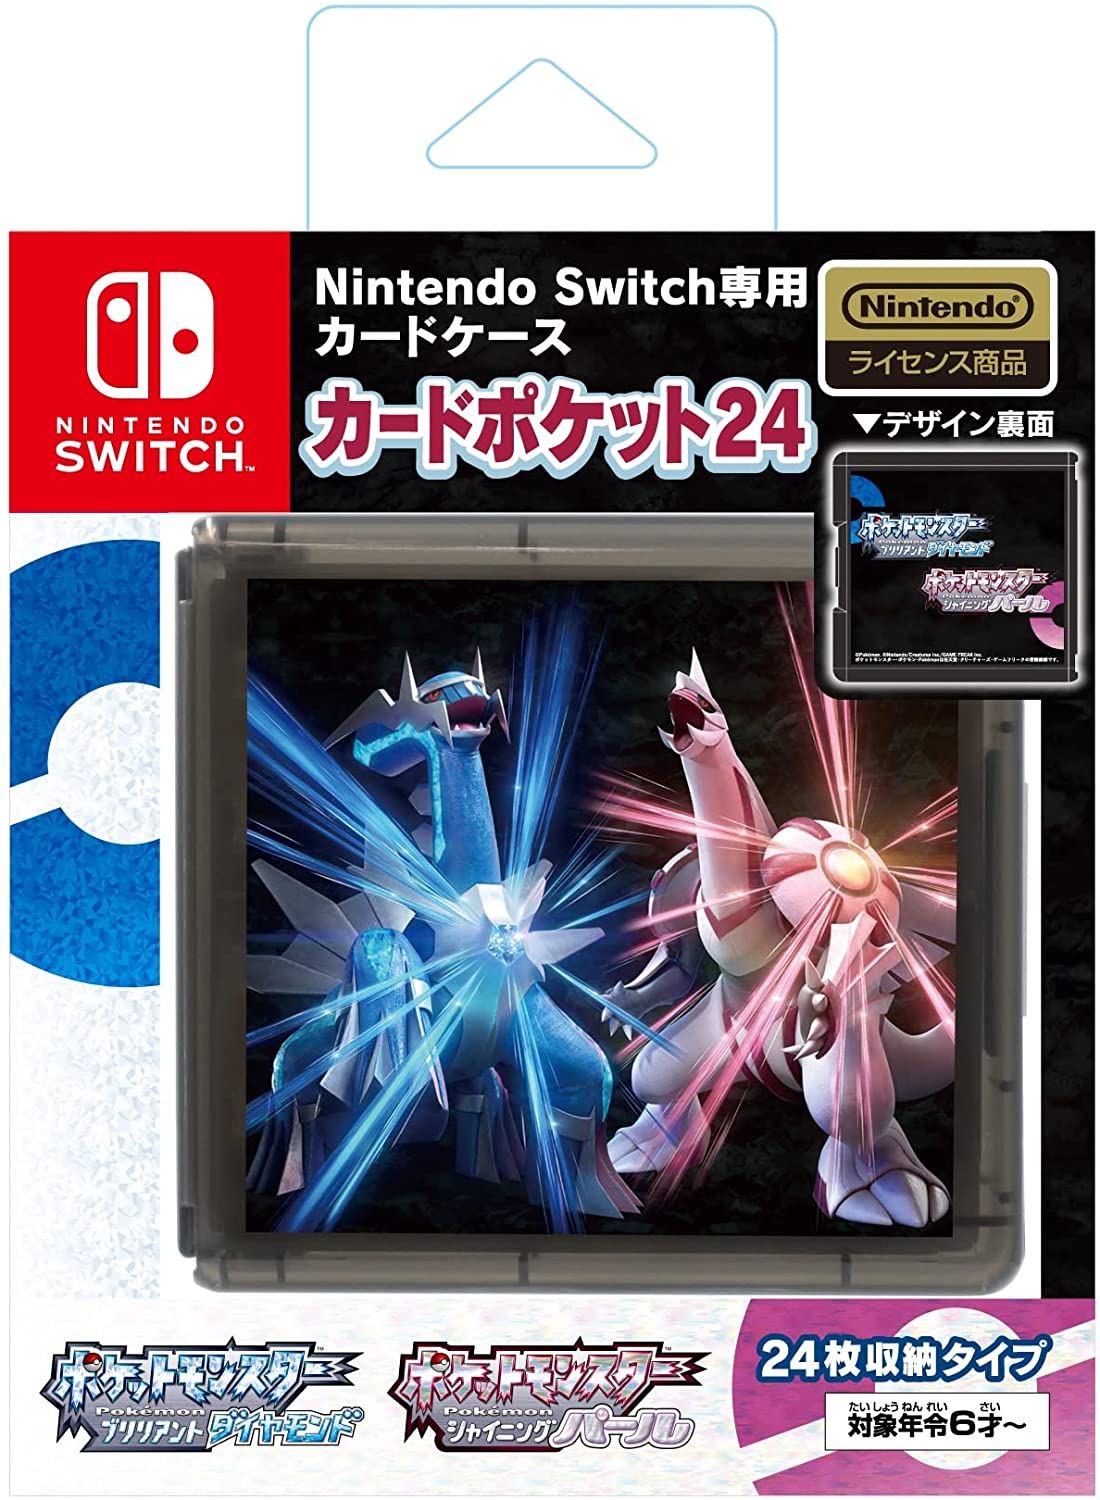 Nintendo Switch Card Pocket 24 (Dialga & Palkia) for Nintendo Switch